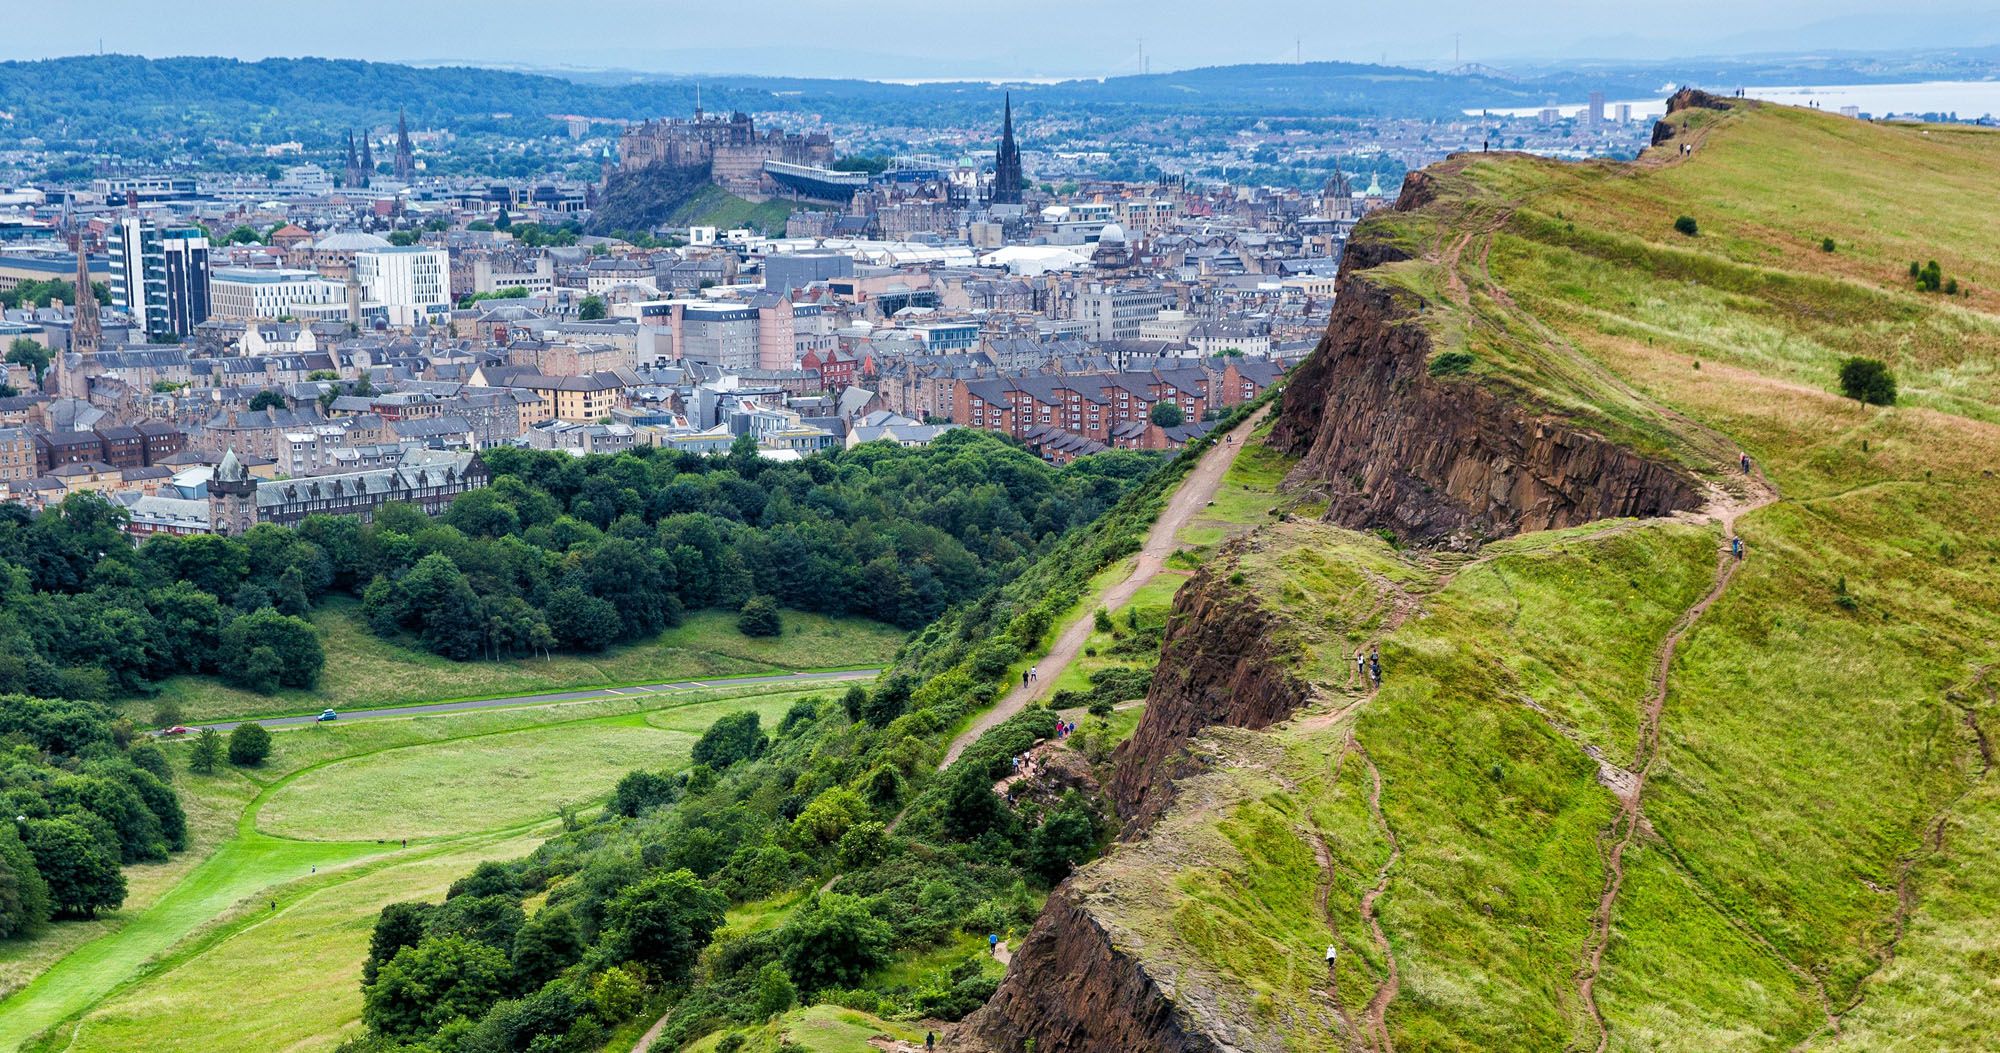 Featured image for “Arthur’s Seat: Climb an Extinct Volcano in Edinburgh”